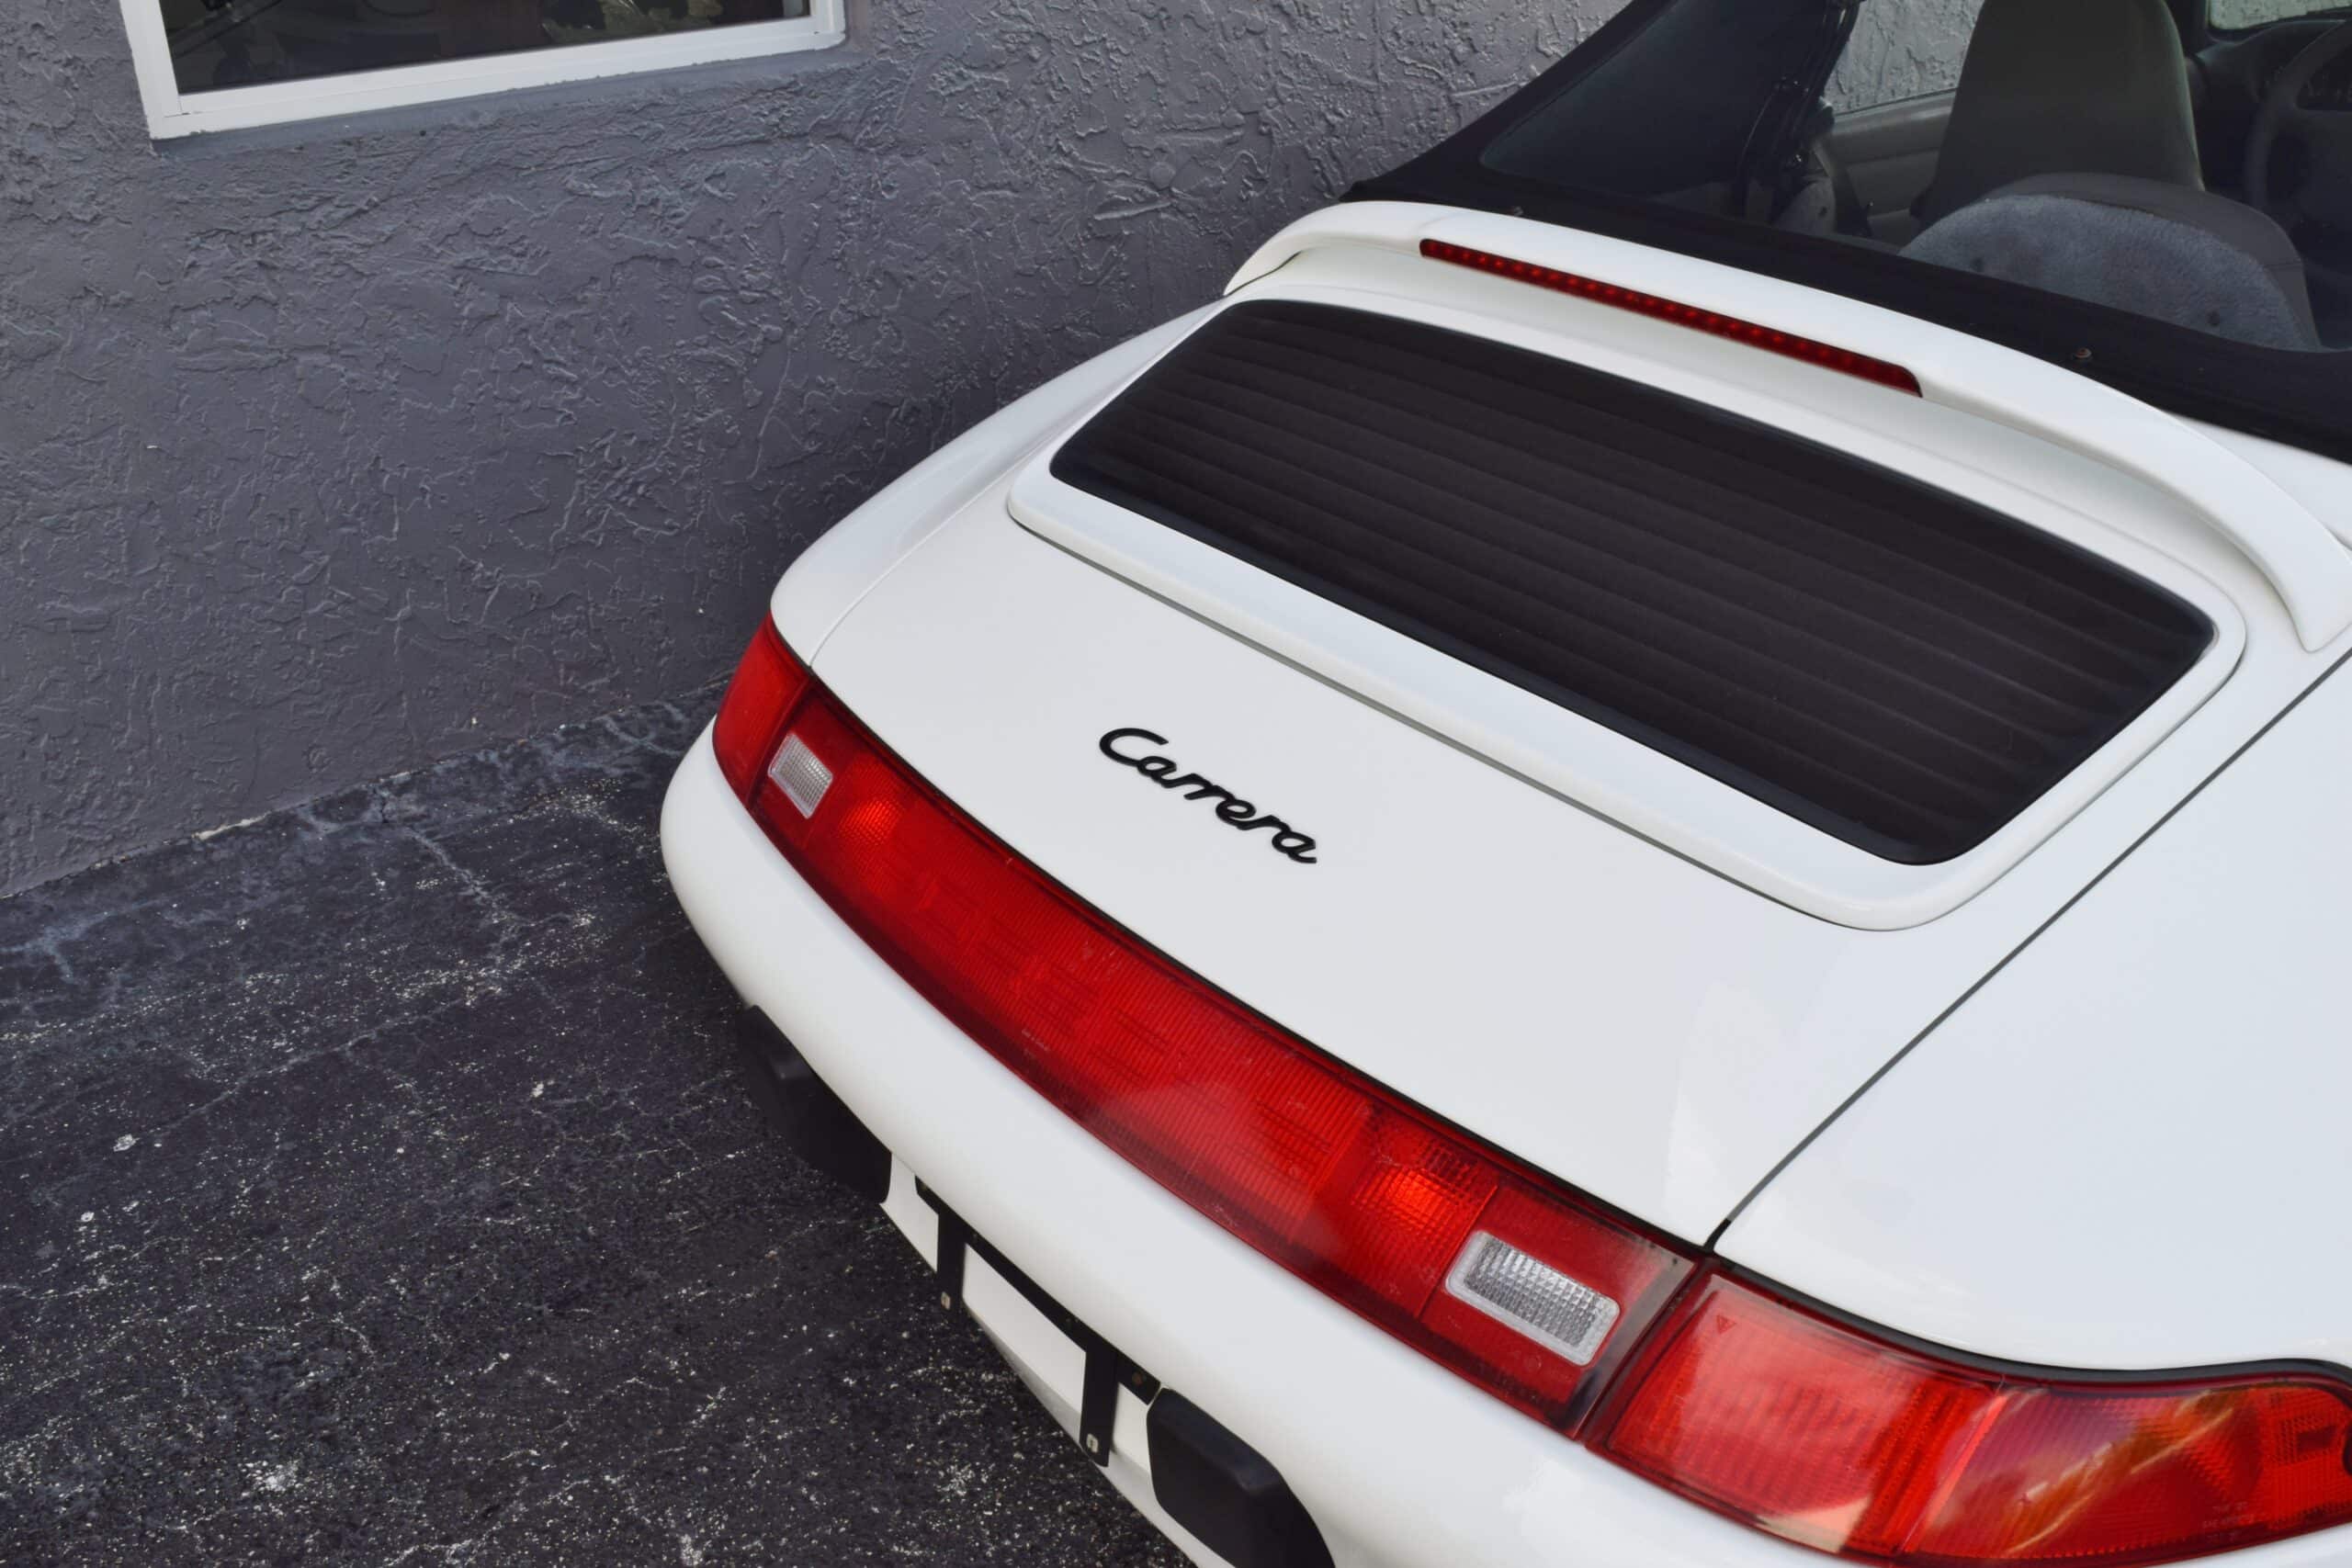 1995 Porsche 911 Carrera 993 Gran Prix White – New Convertible Top – Euro Height – Turbo Twists – Rare Option